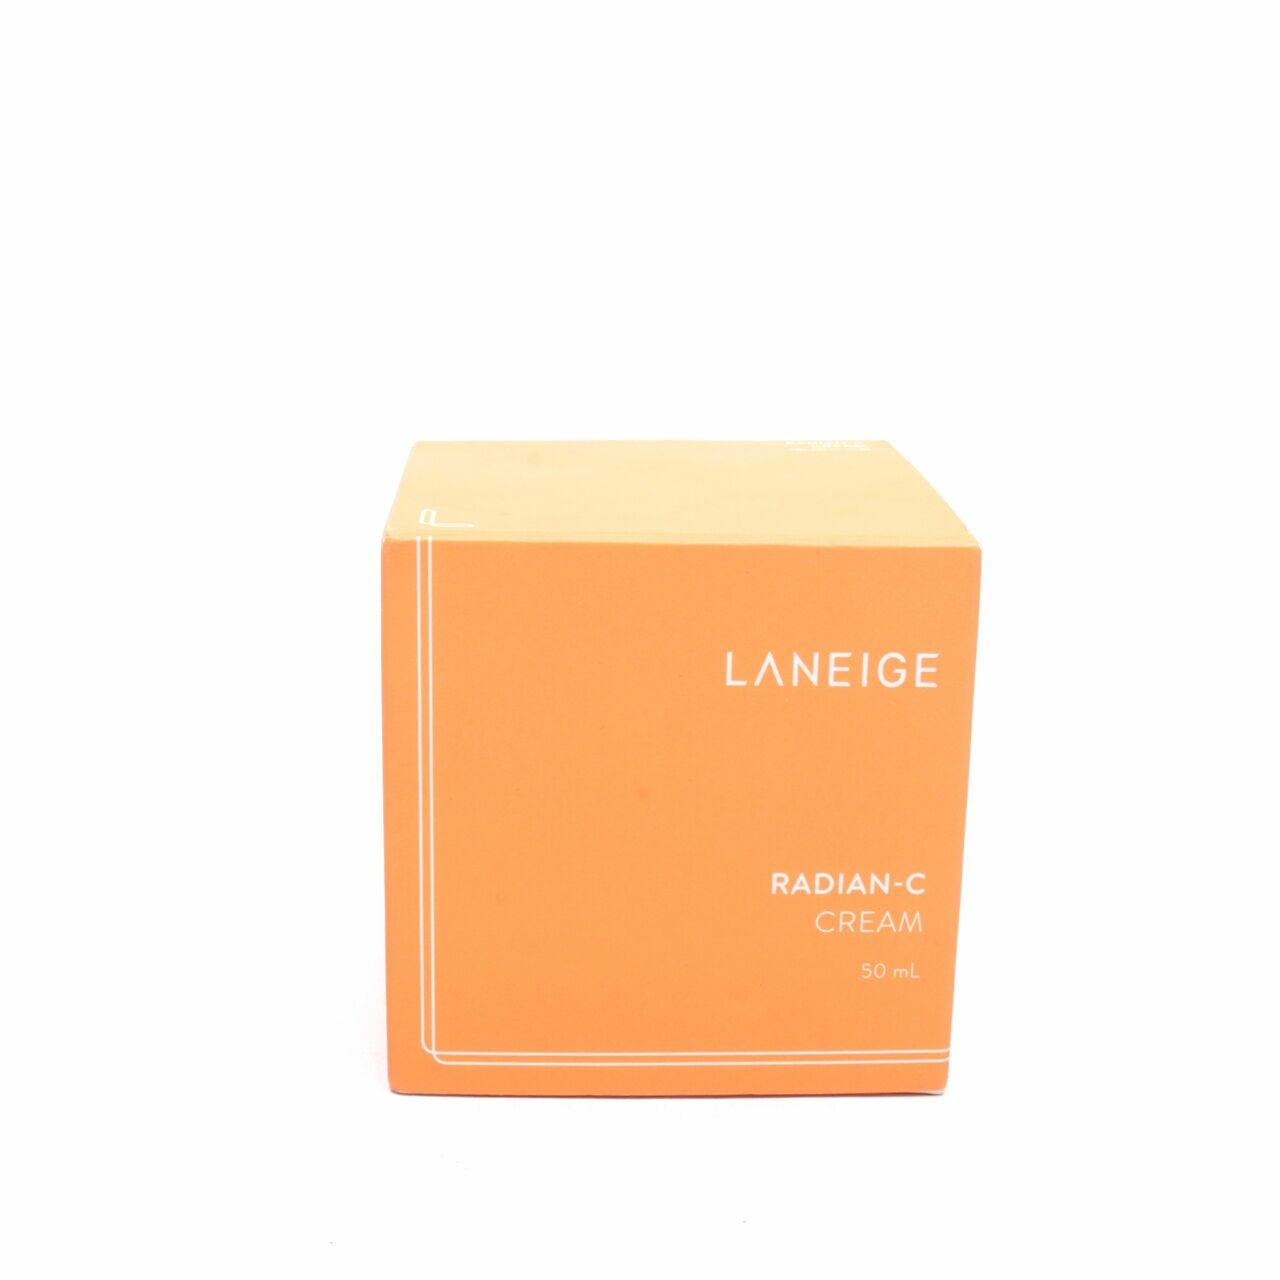 Laneige Radian-C Cream Skin Care